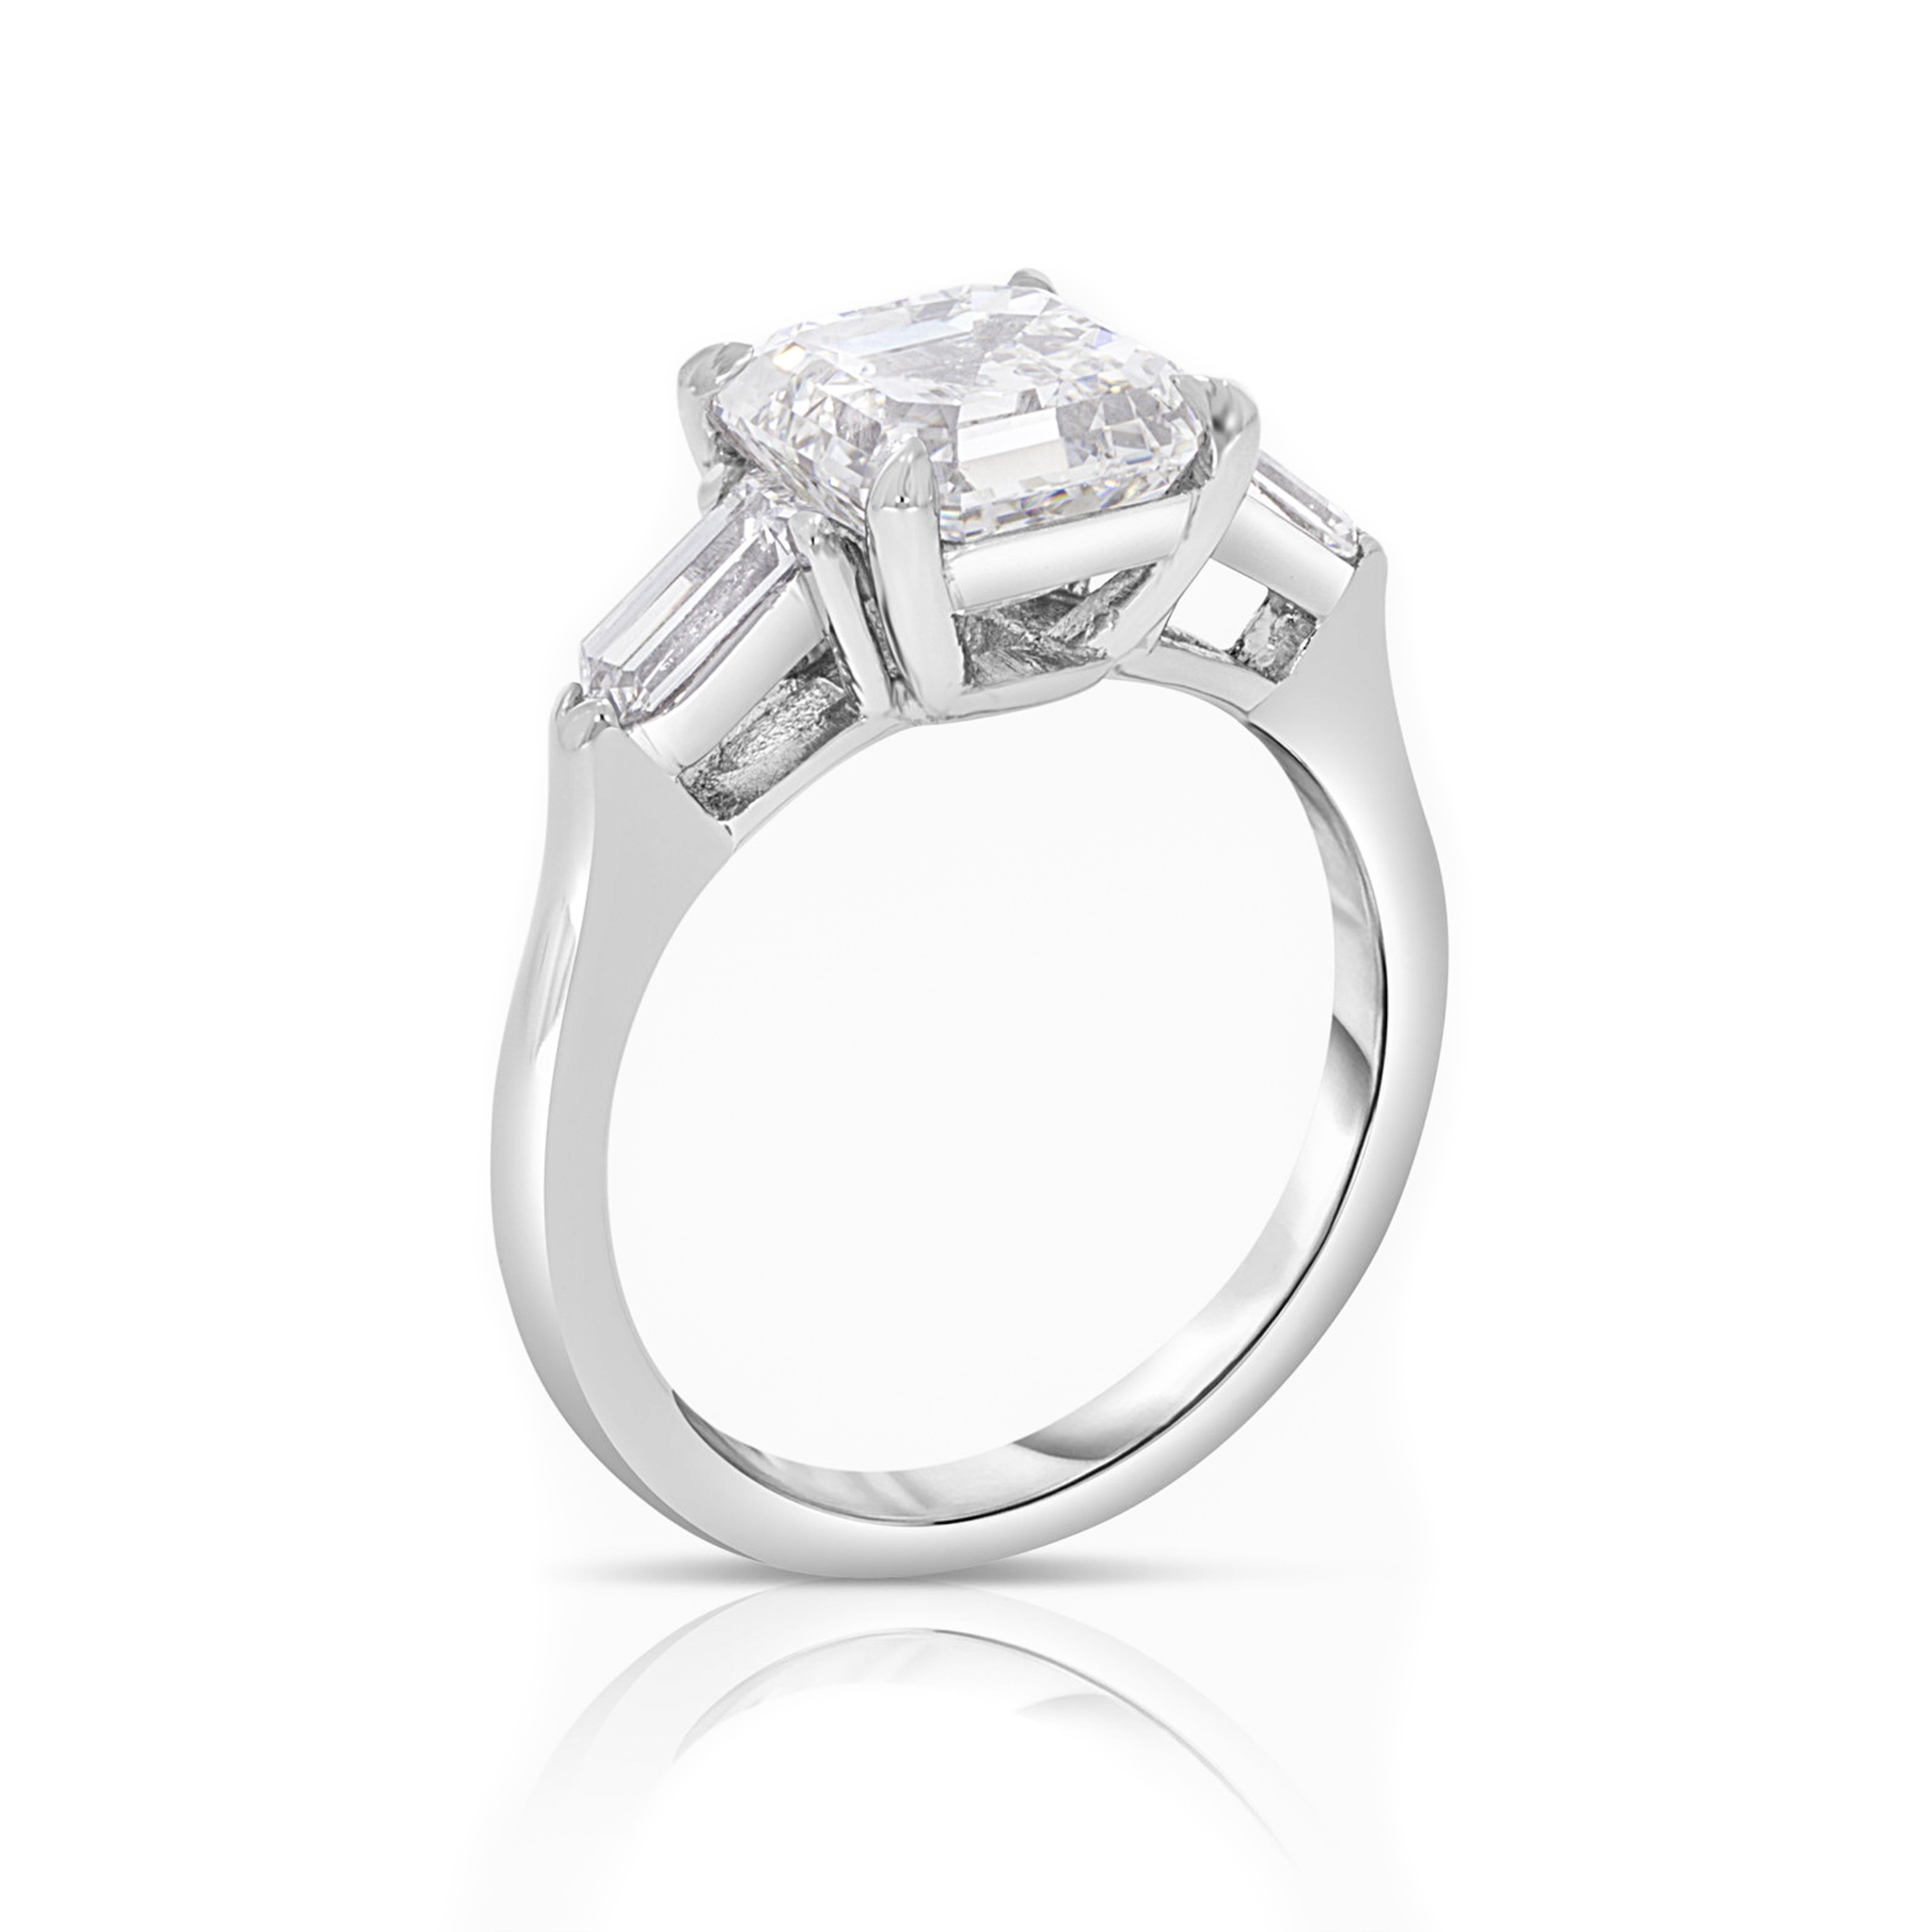 Platinum Engagement Ring with a Square Modified Emerald cut Diamond 3.24 carat w/bullets 0.65 carat total weight. 
1 Square Modified Emerald cut Diamond: 3.24 carat, H color, VVS2 clarity.
2 Bullet cut Diamonds: 0.65 carat, G/H color, VVS2